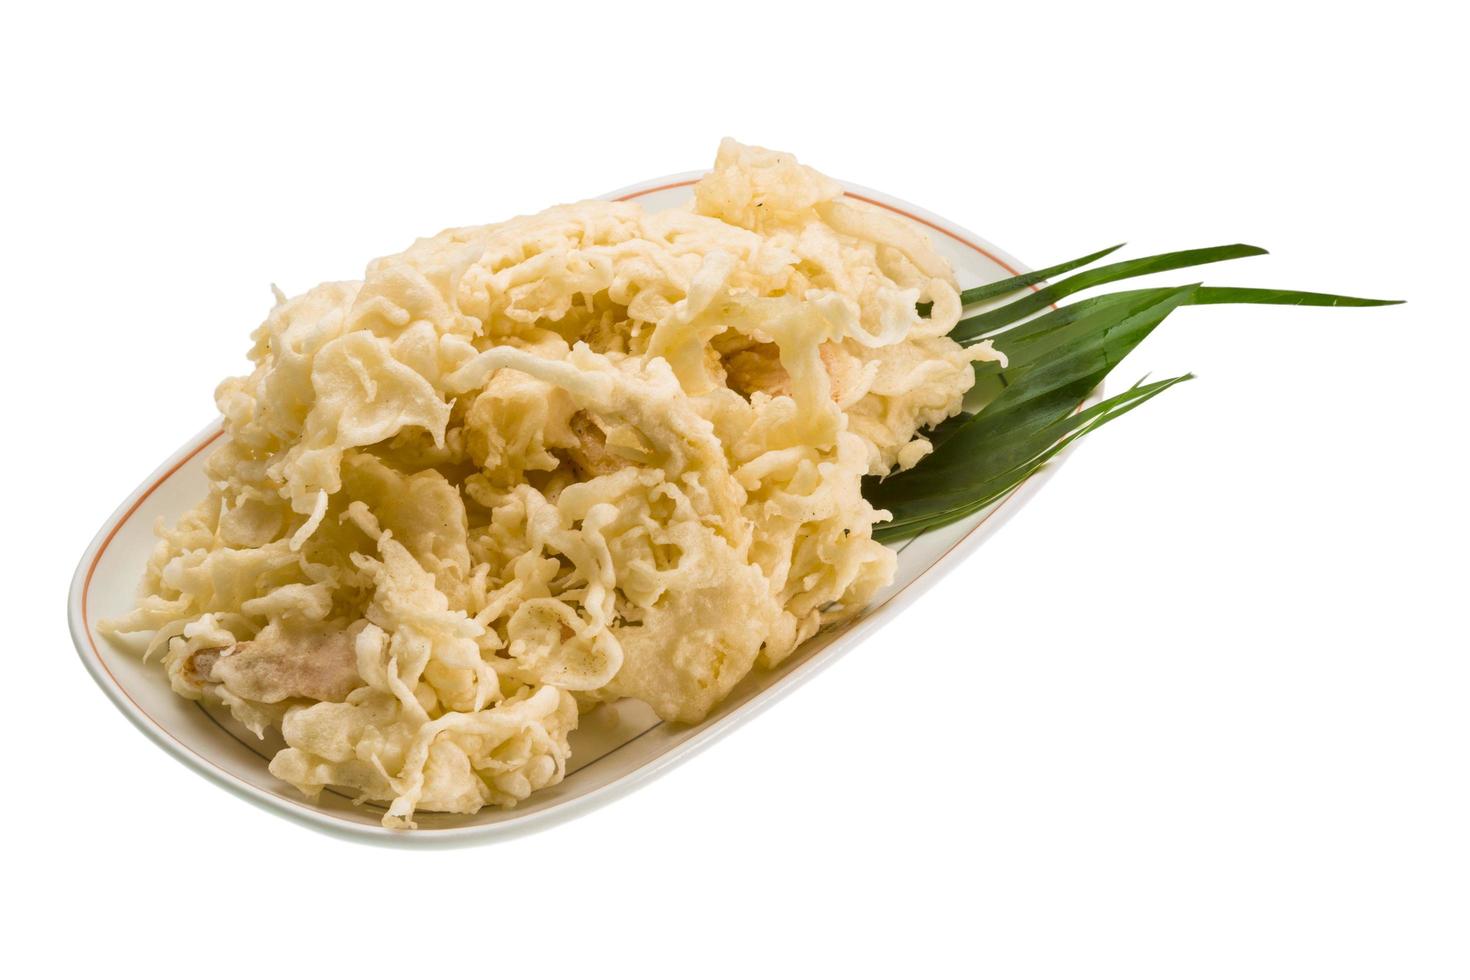 Prawn tempura on the plate and white background photo